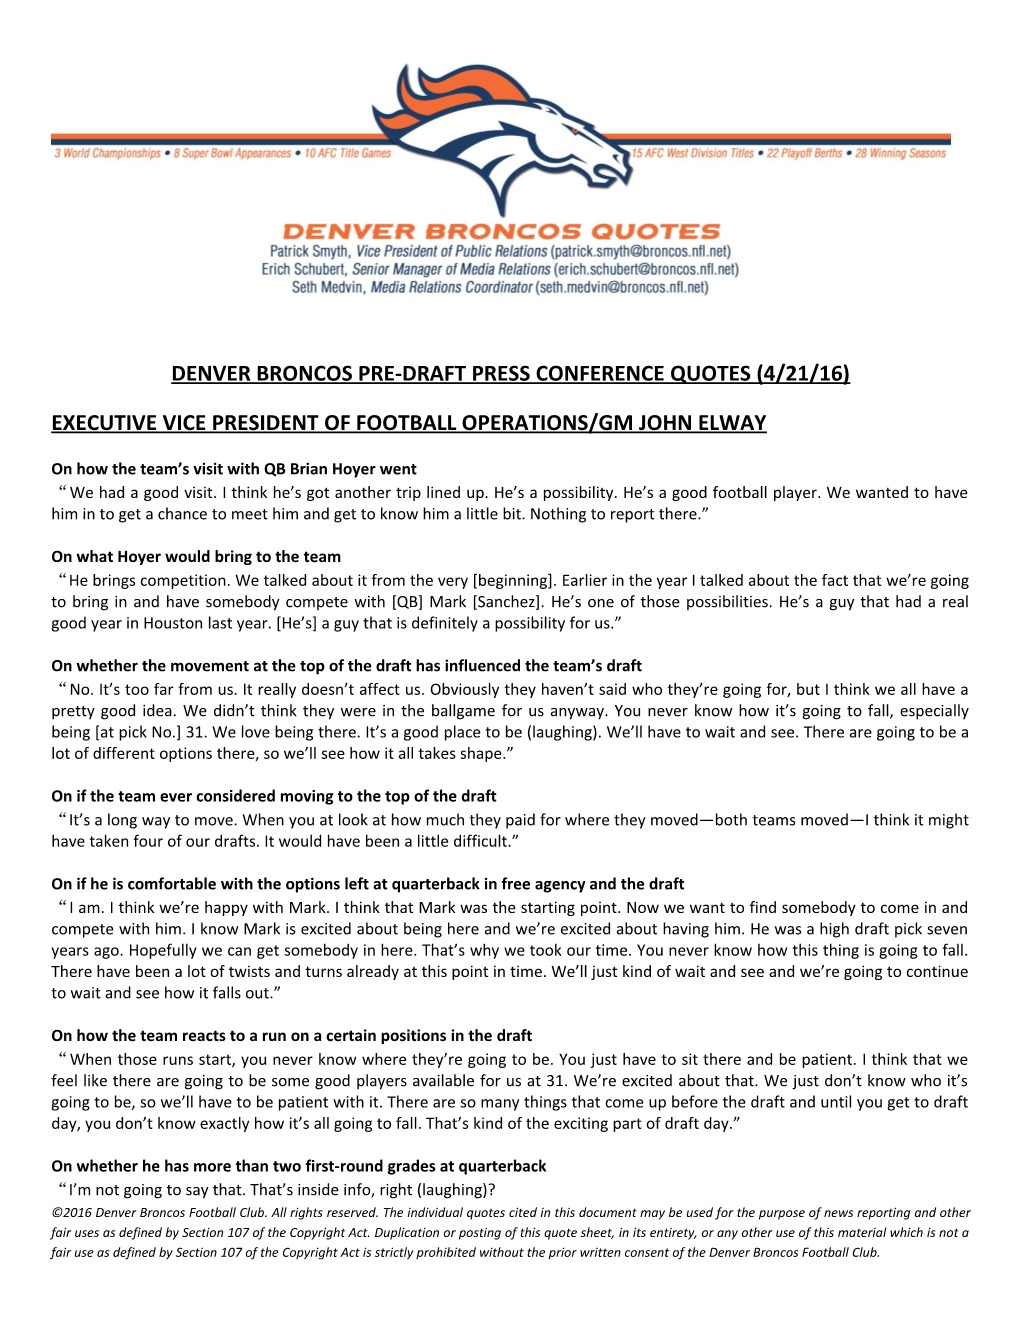 Denver Broncos Pre-Draft Press Conference Quotes (4/21/16)